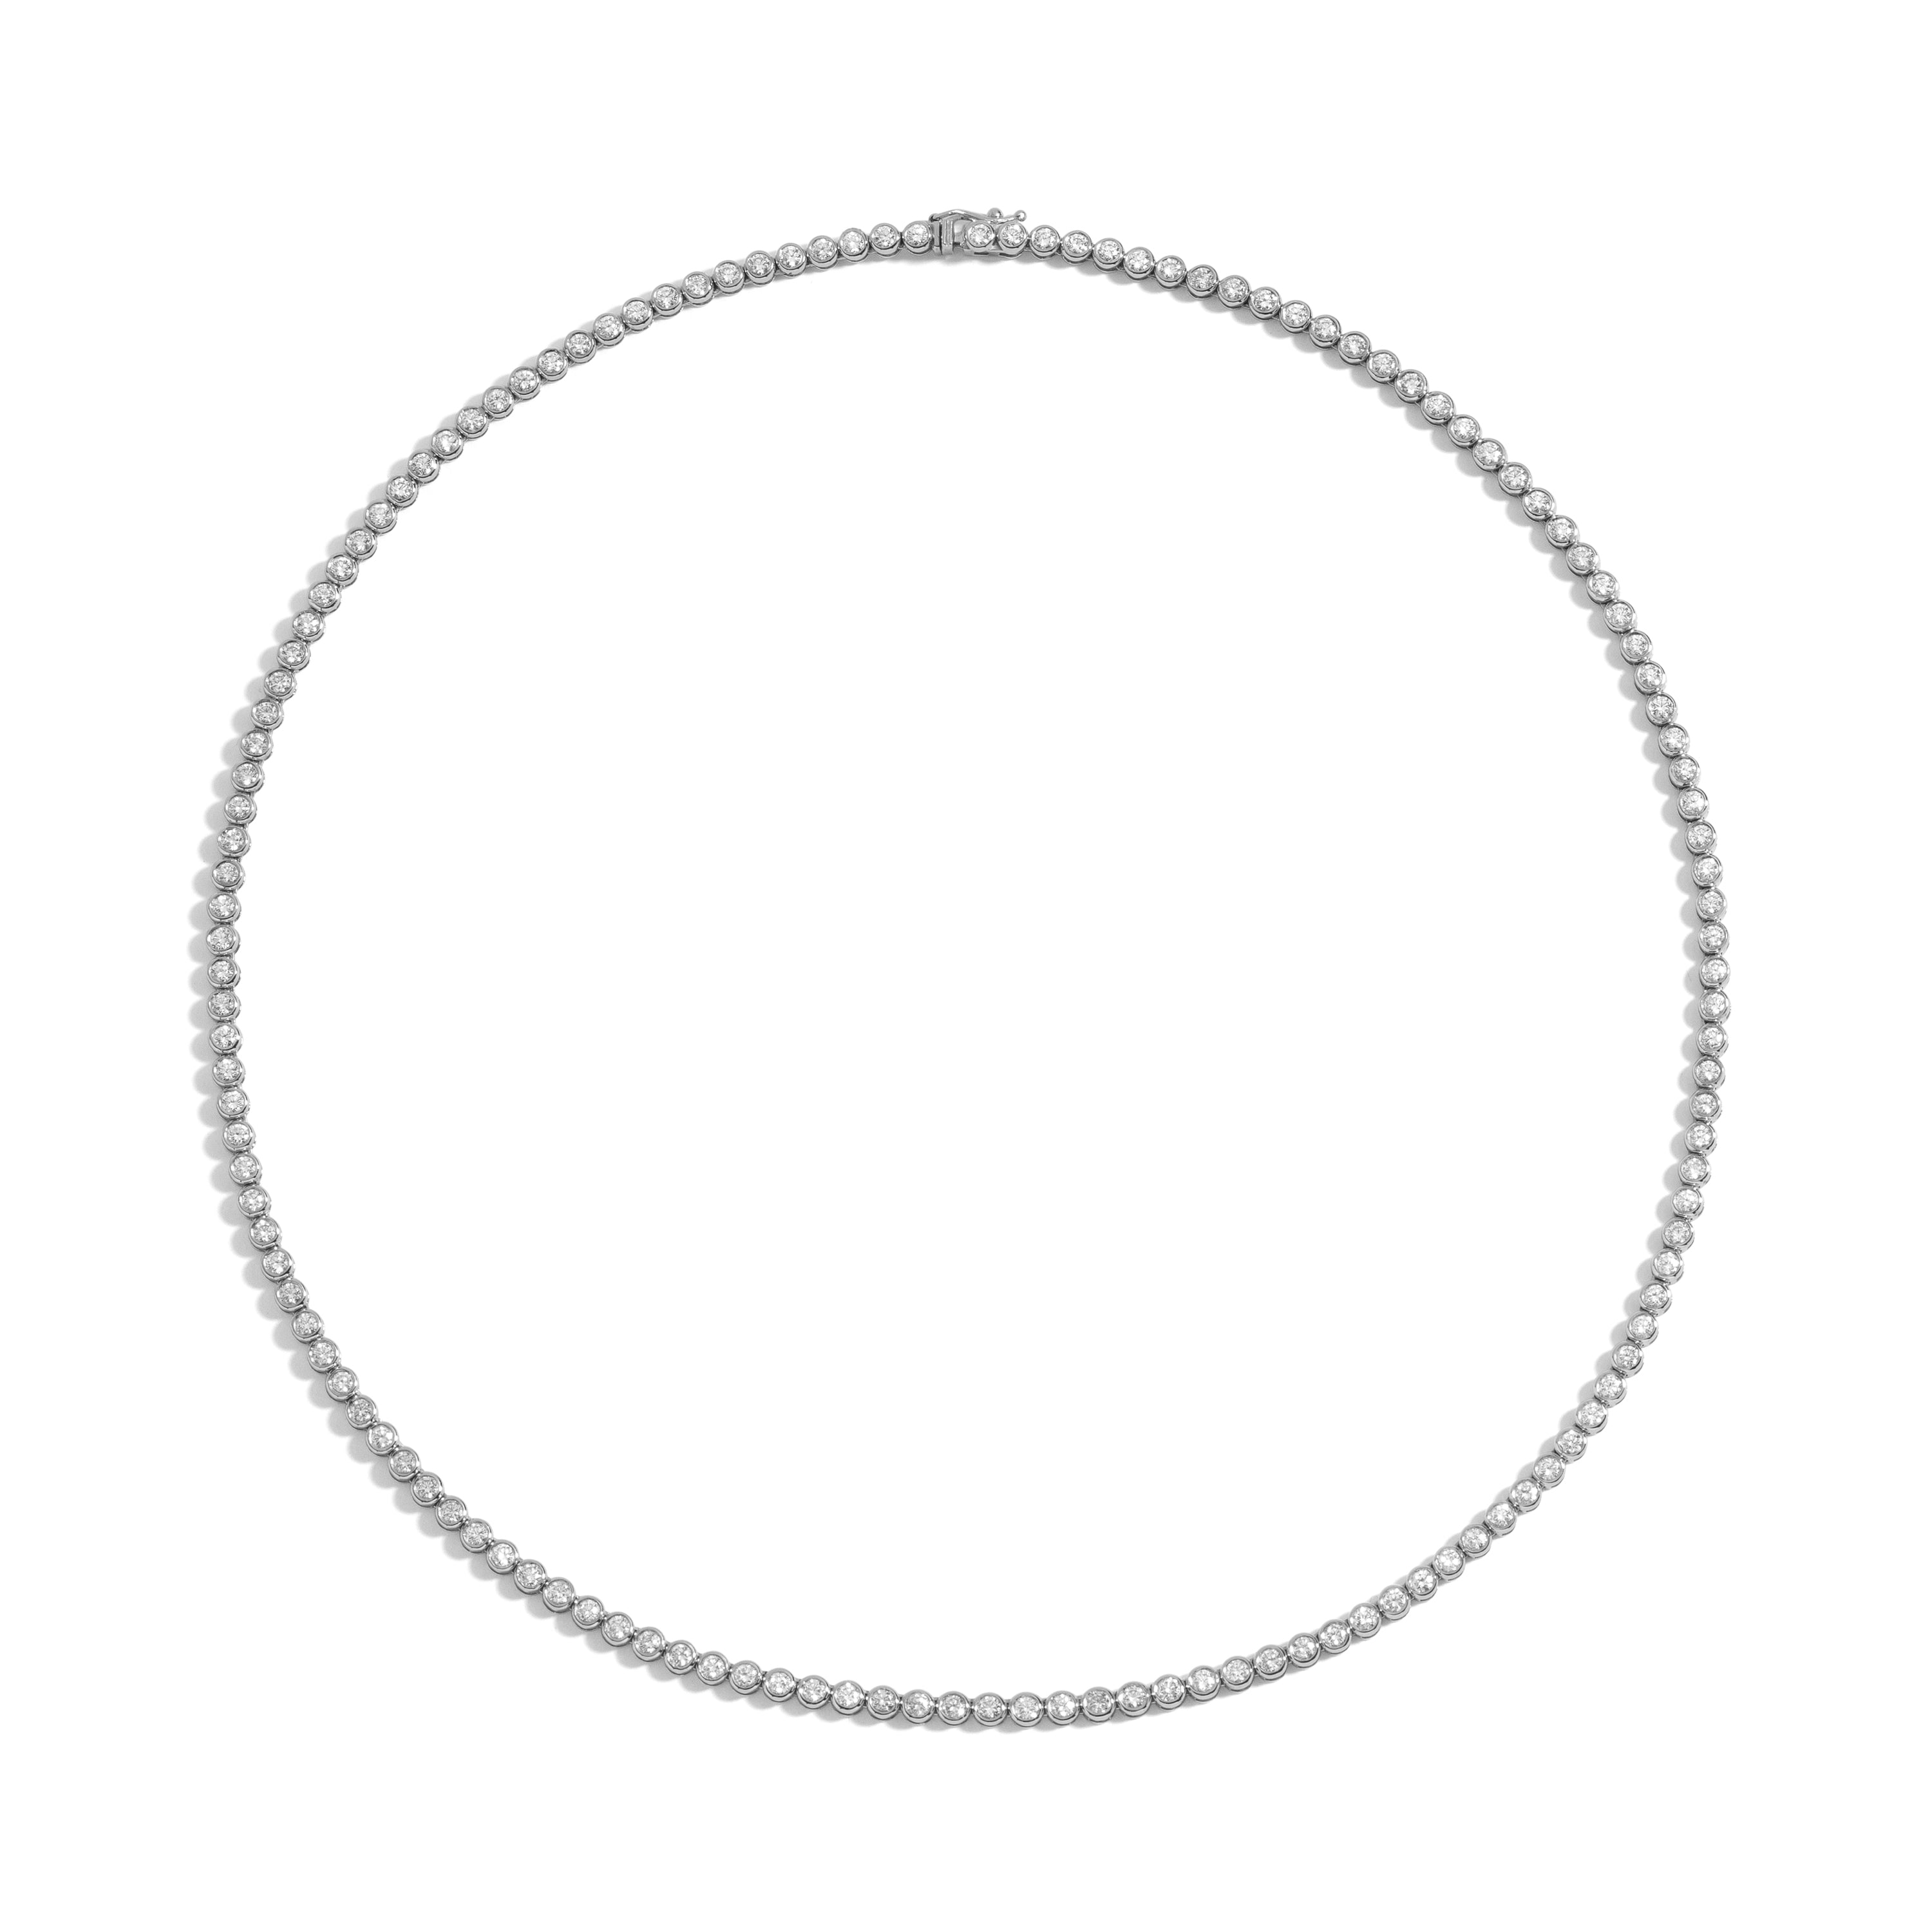 White Gold Cable Chain Necklace - Turgeon Raine